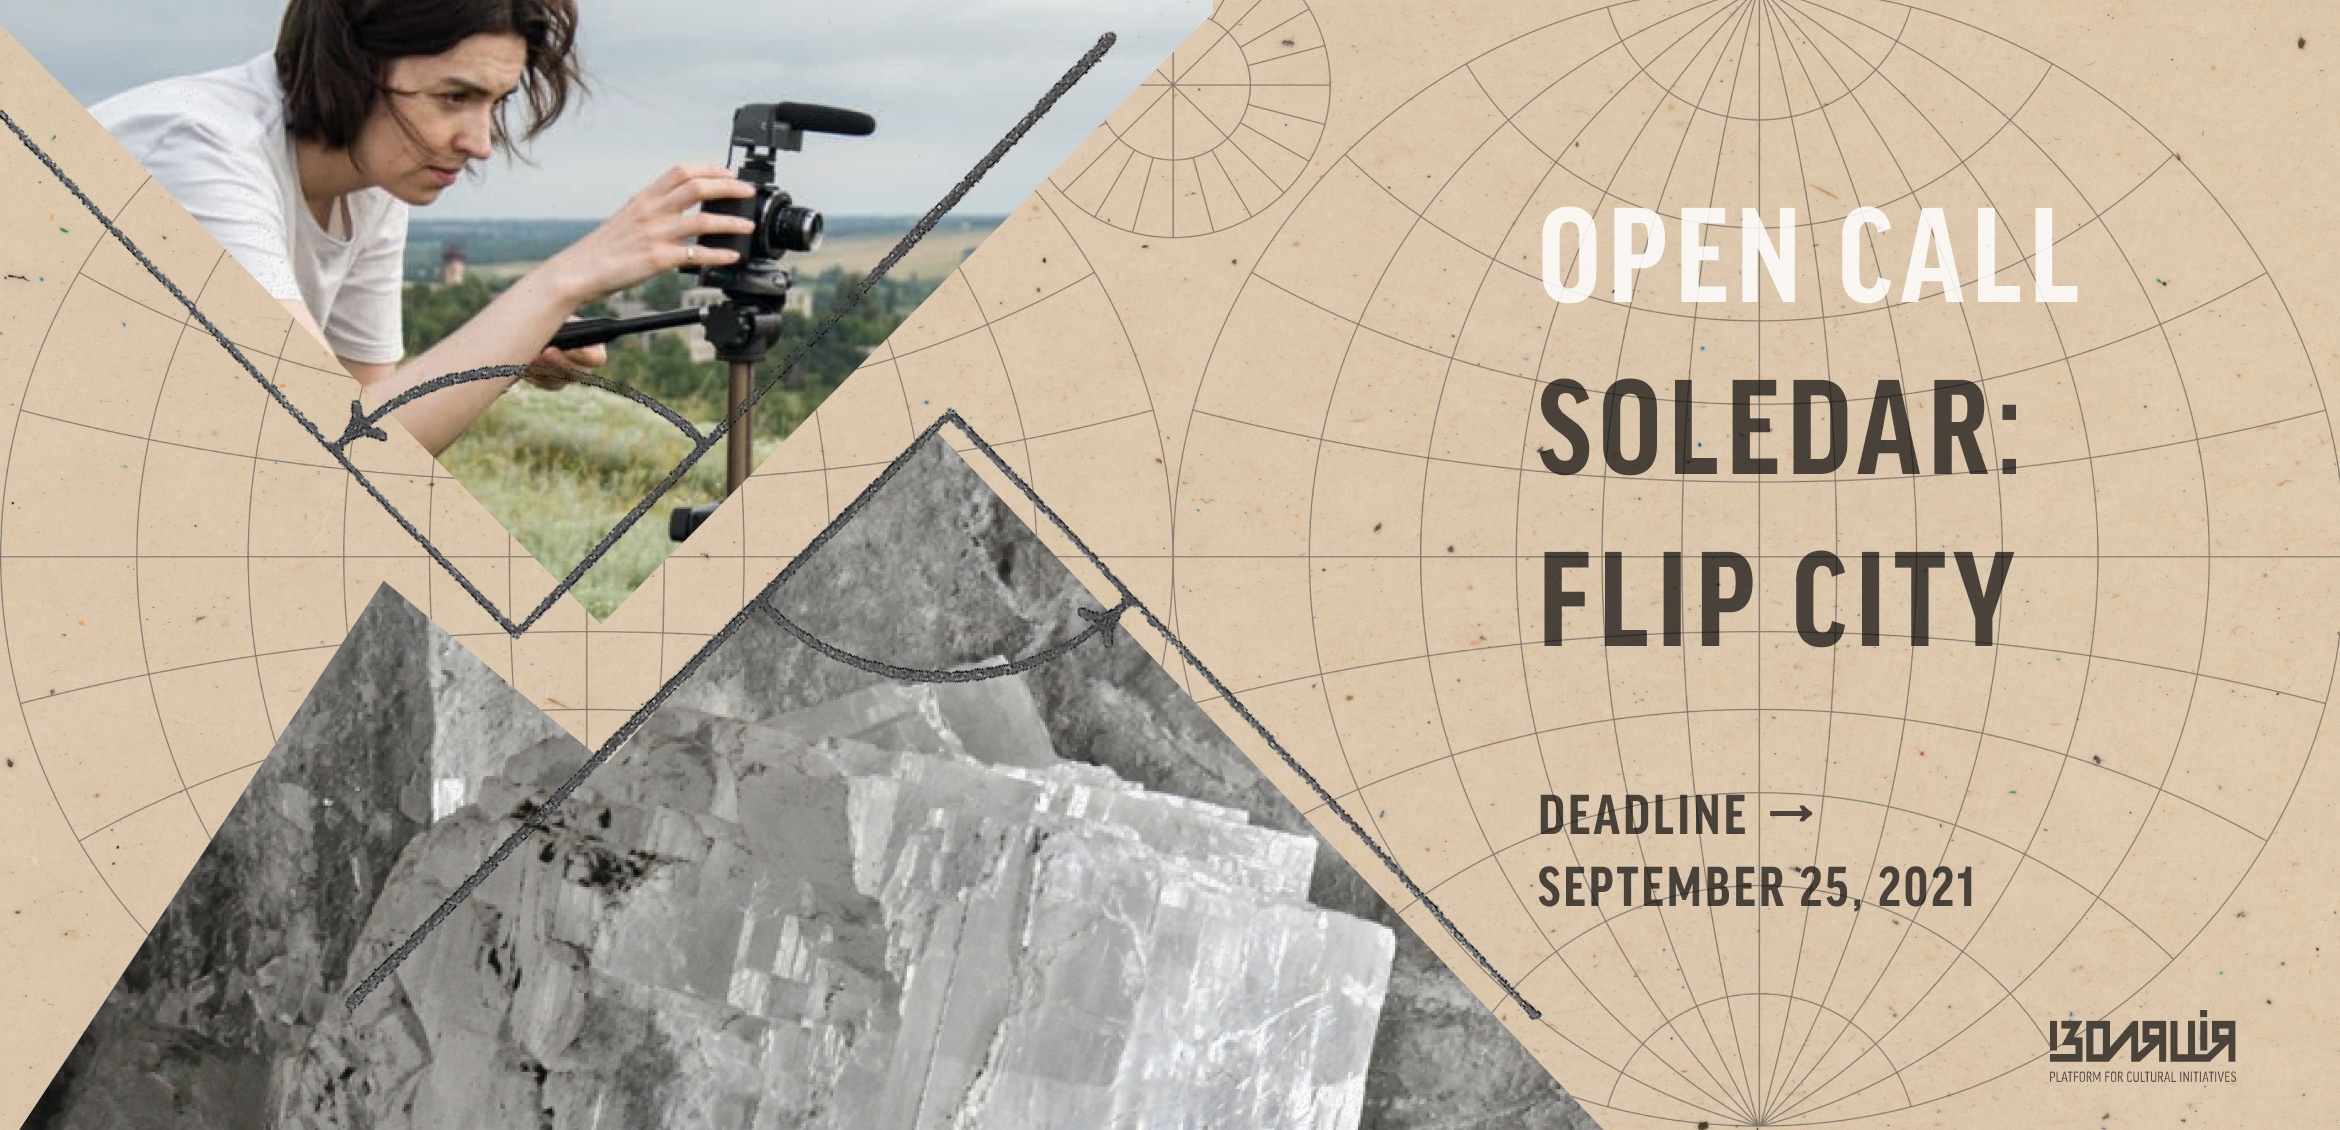 International open call for "Soledar: Flip City" residency